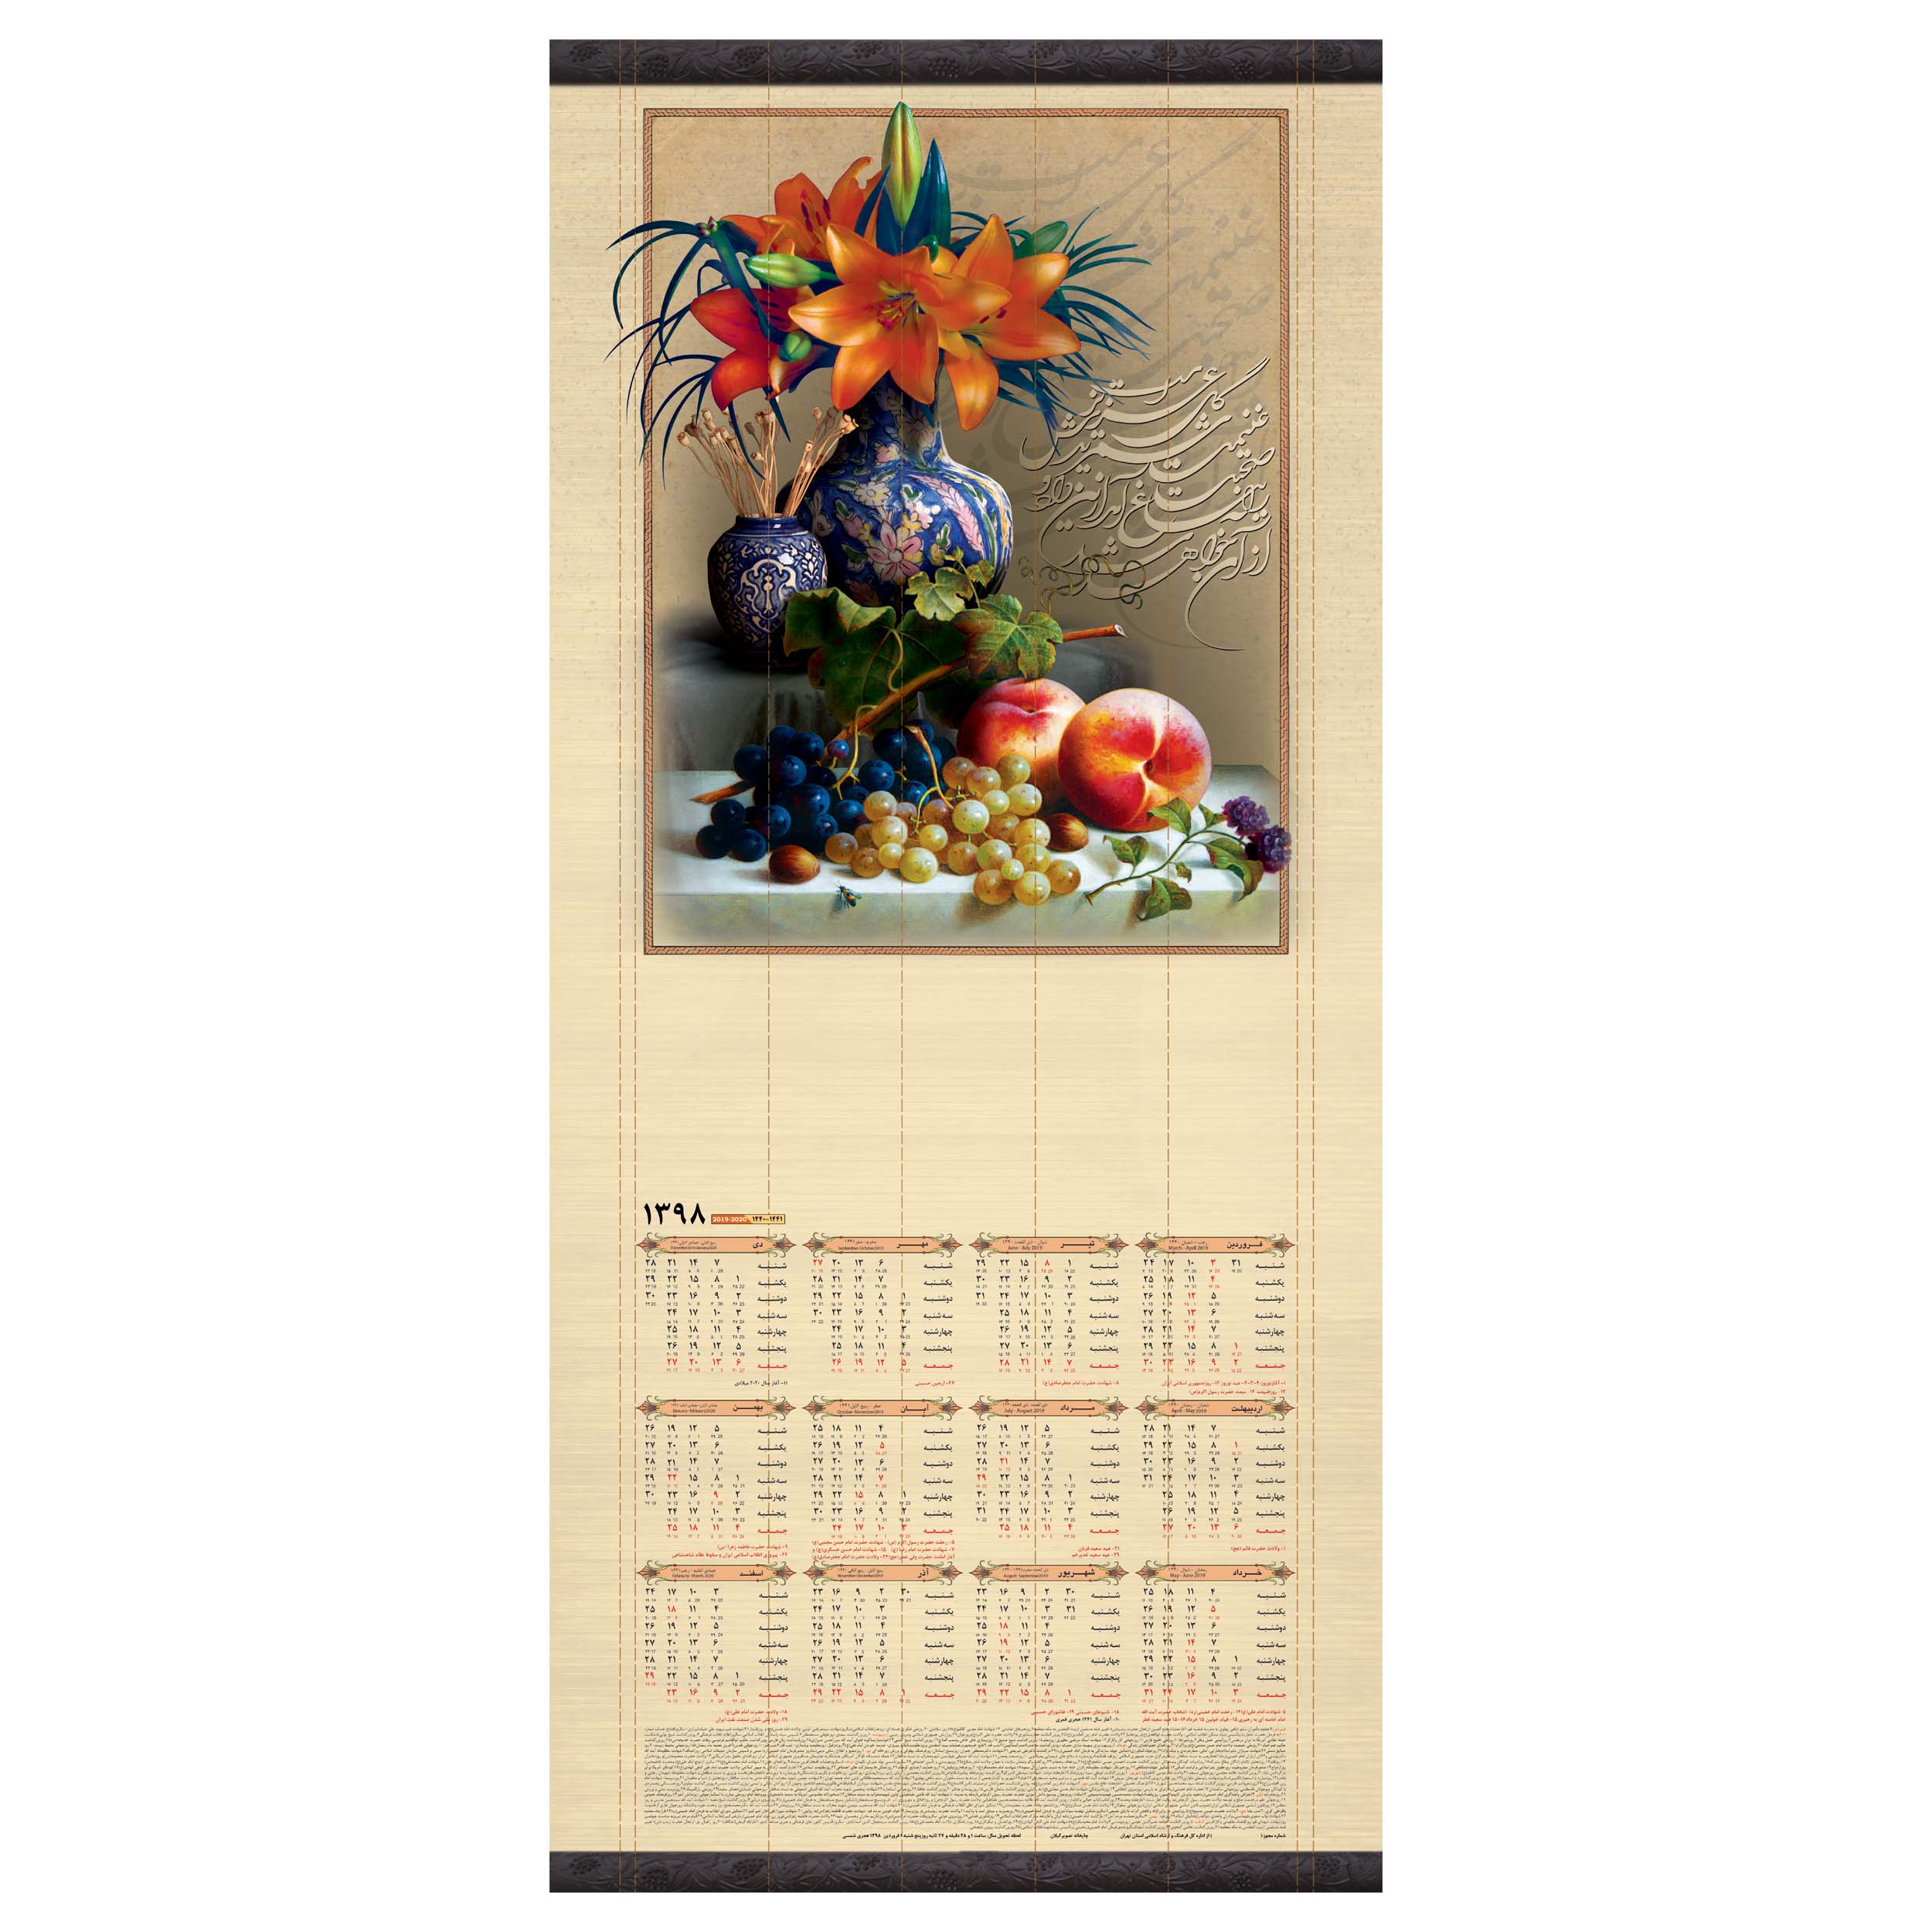 تقویم دیواری 1398 طرح گل و میوه بسته 100 عددی